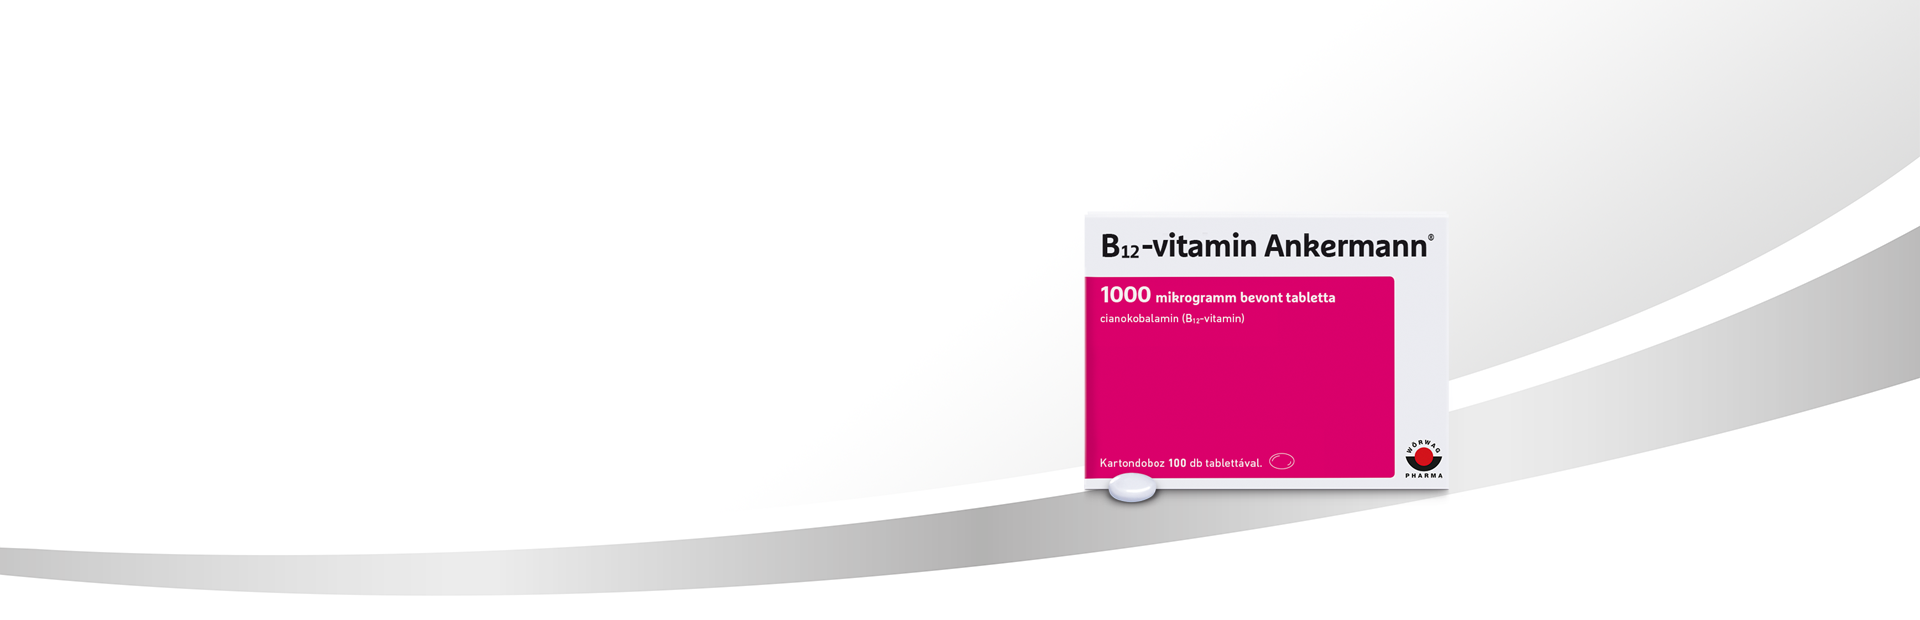 b 12 vitamin hiány tünetei vs